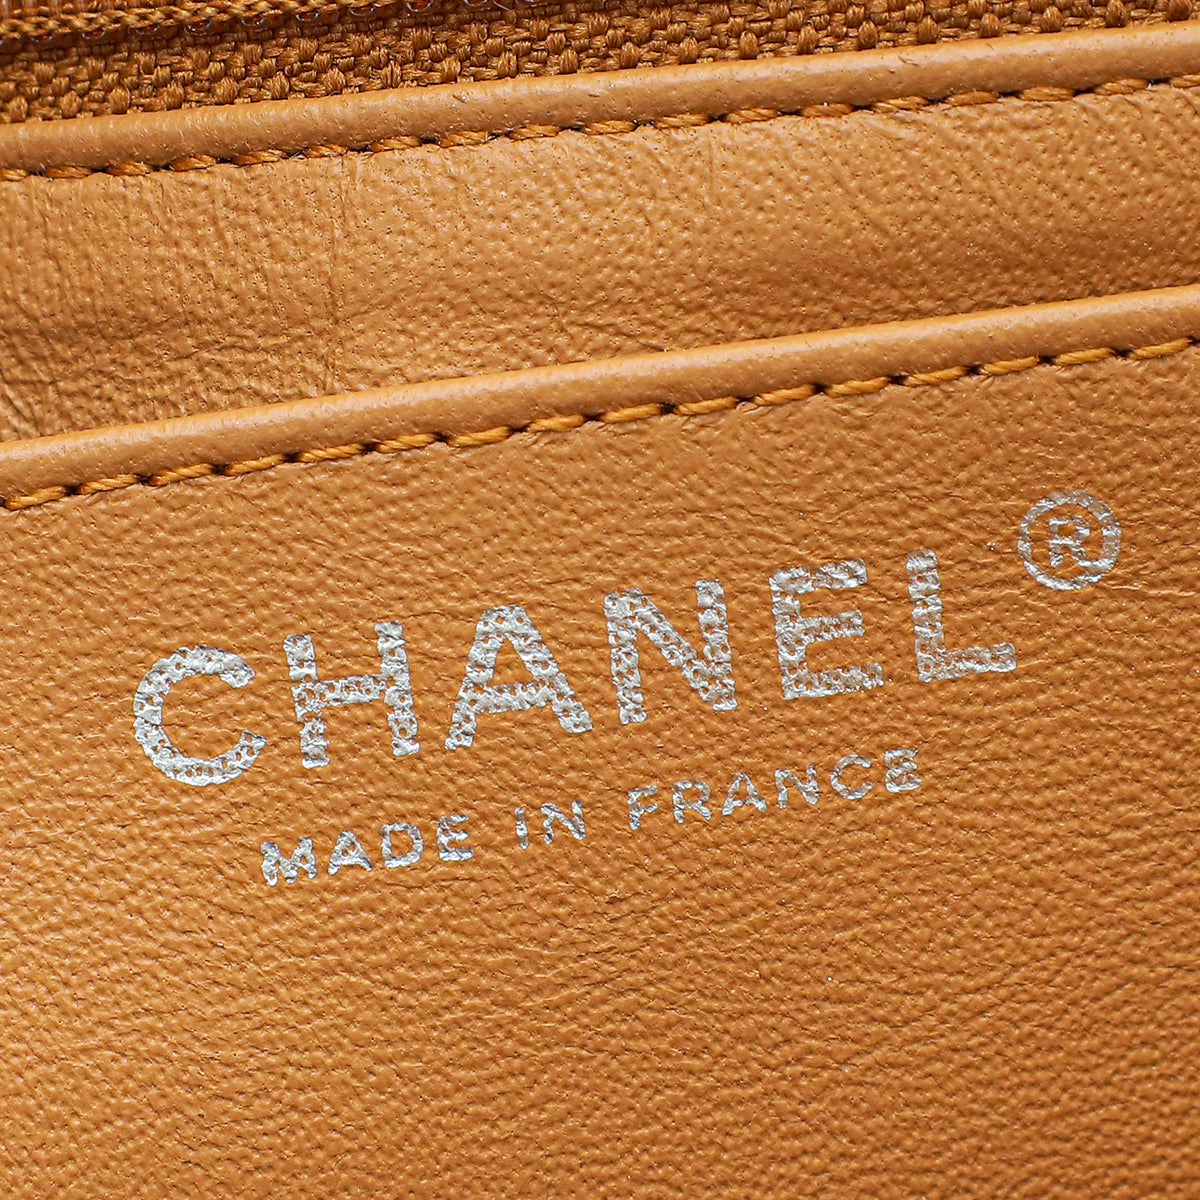 Chanel Bicolor Tweed St. Tropez Flap Bag Large